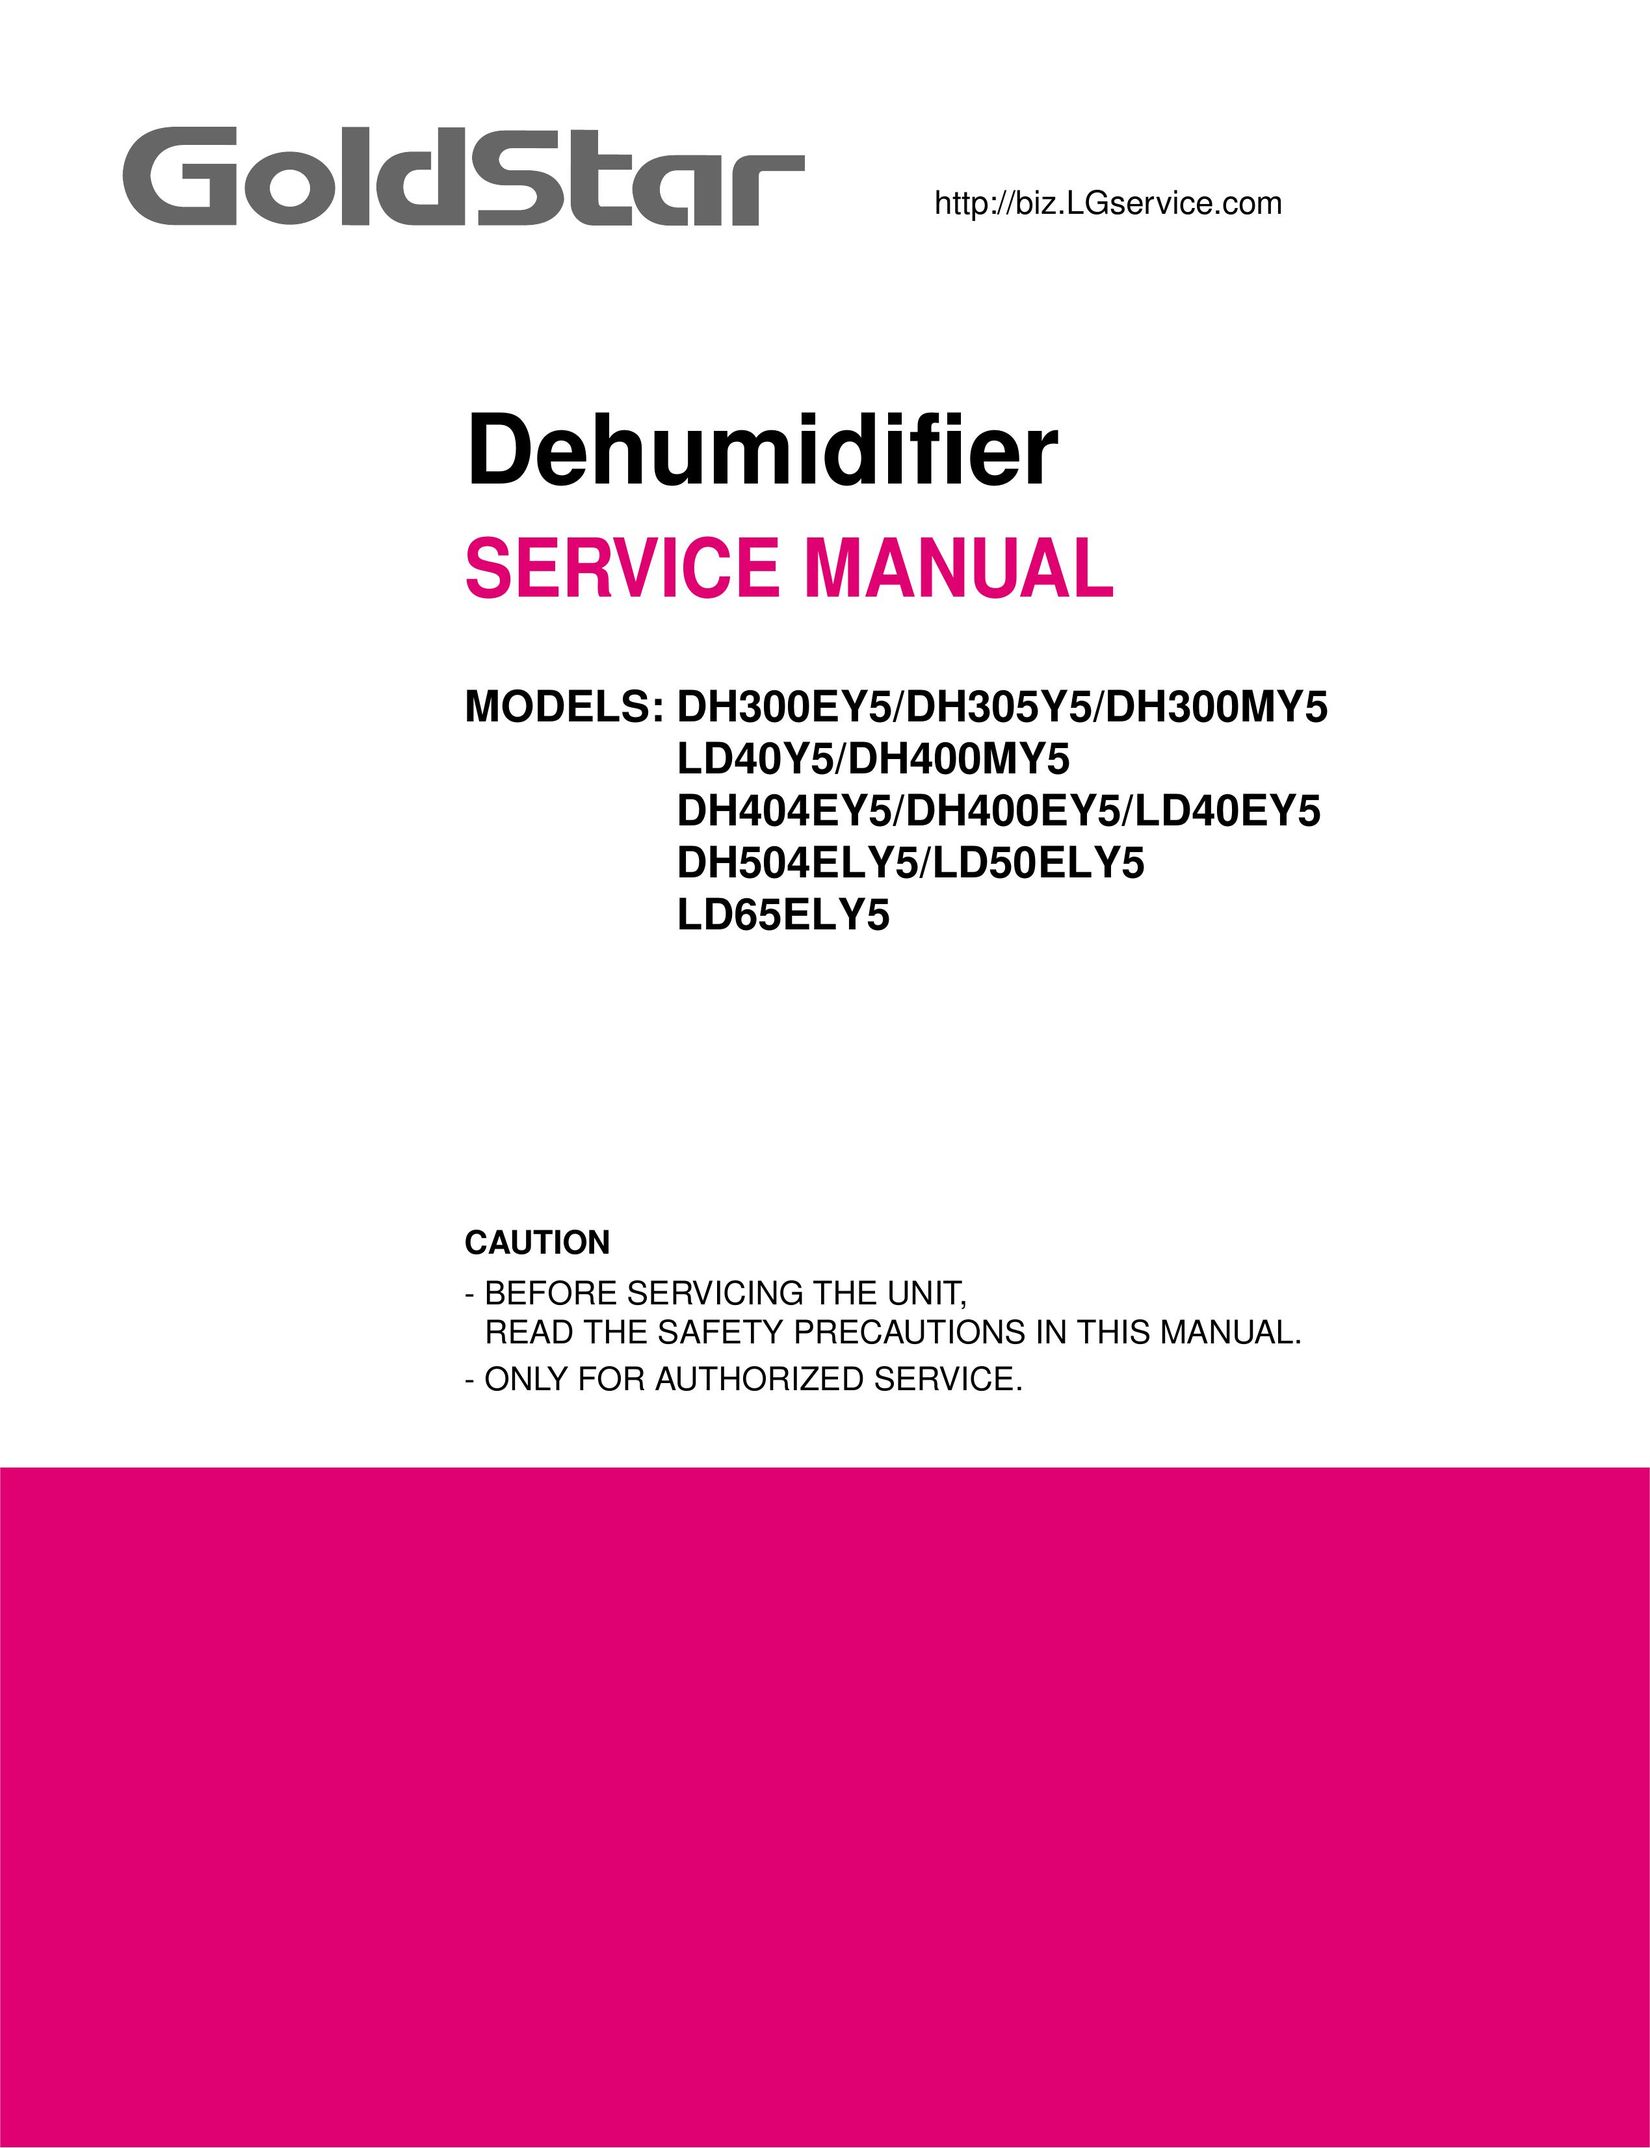 Frigidaire LD50ELY5 Dehumidifier User Manual